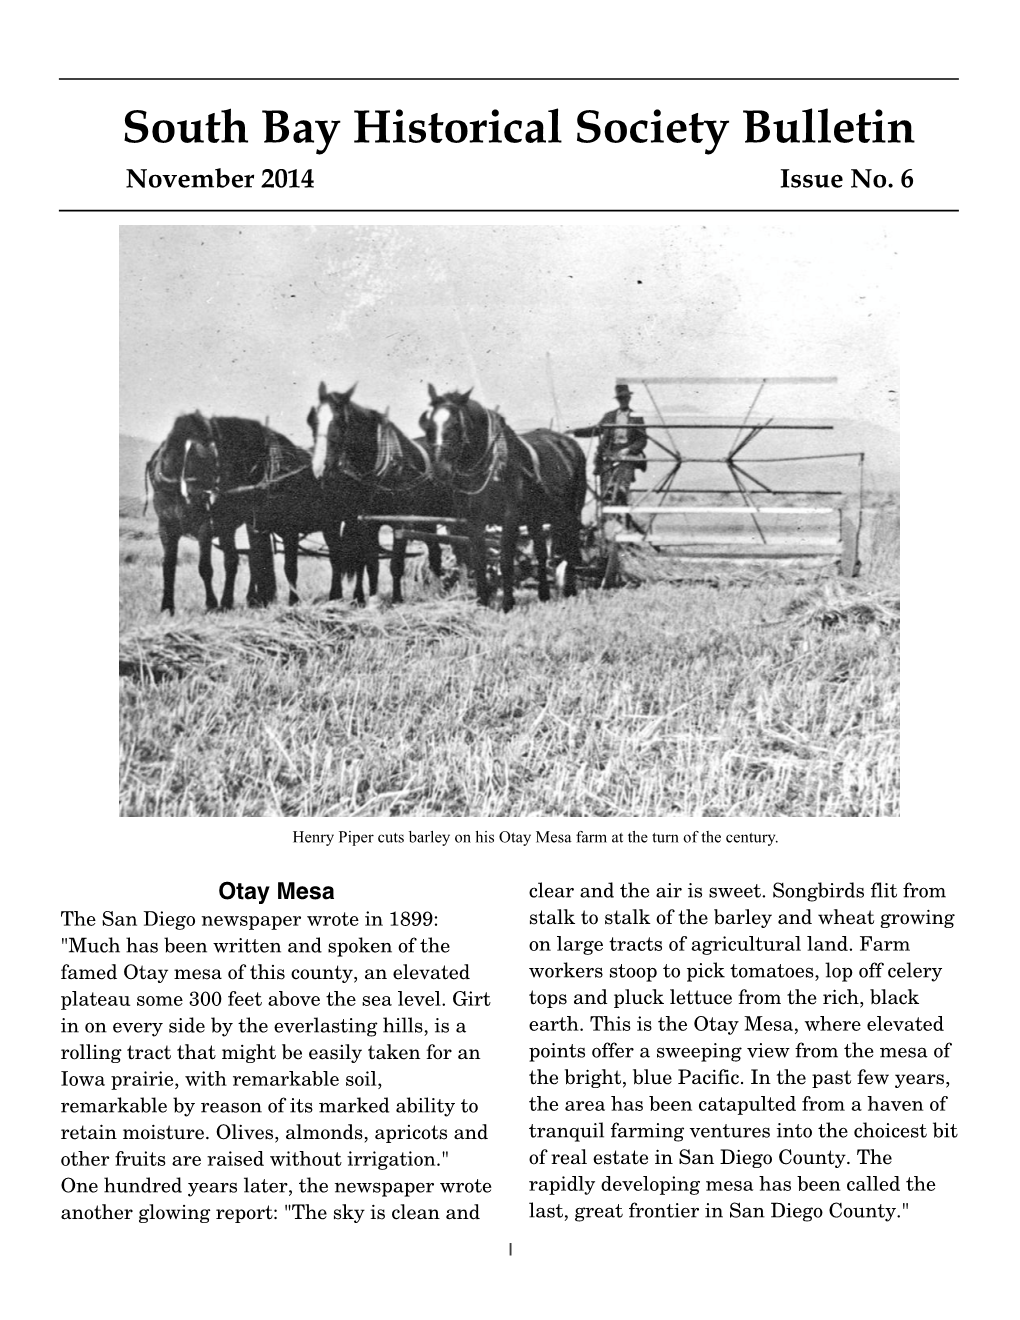 South Bay Historical Society Bulletin November 2014 Issue No